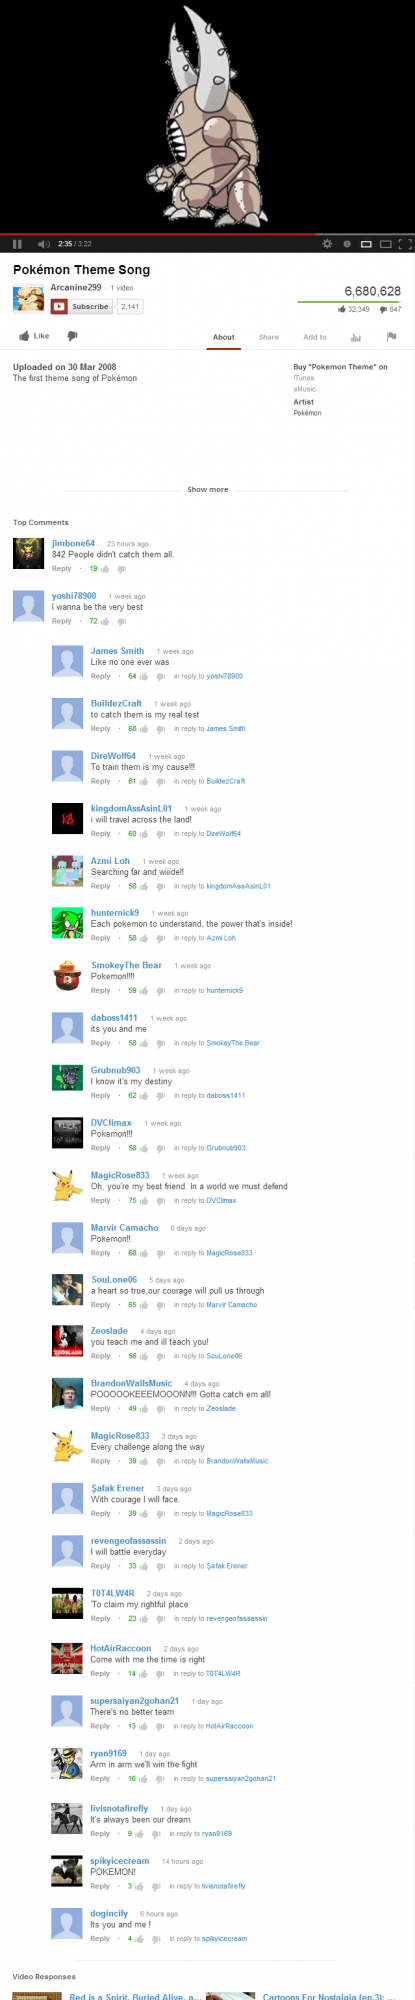 Pokemon theme youtube comments